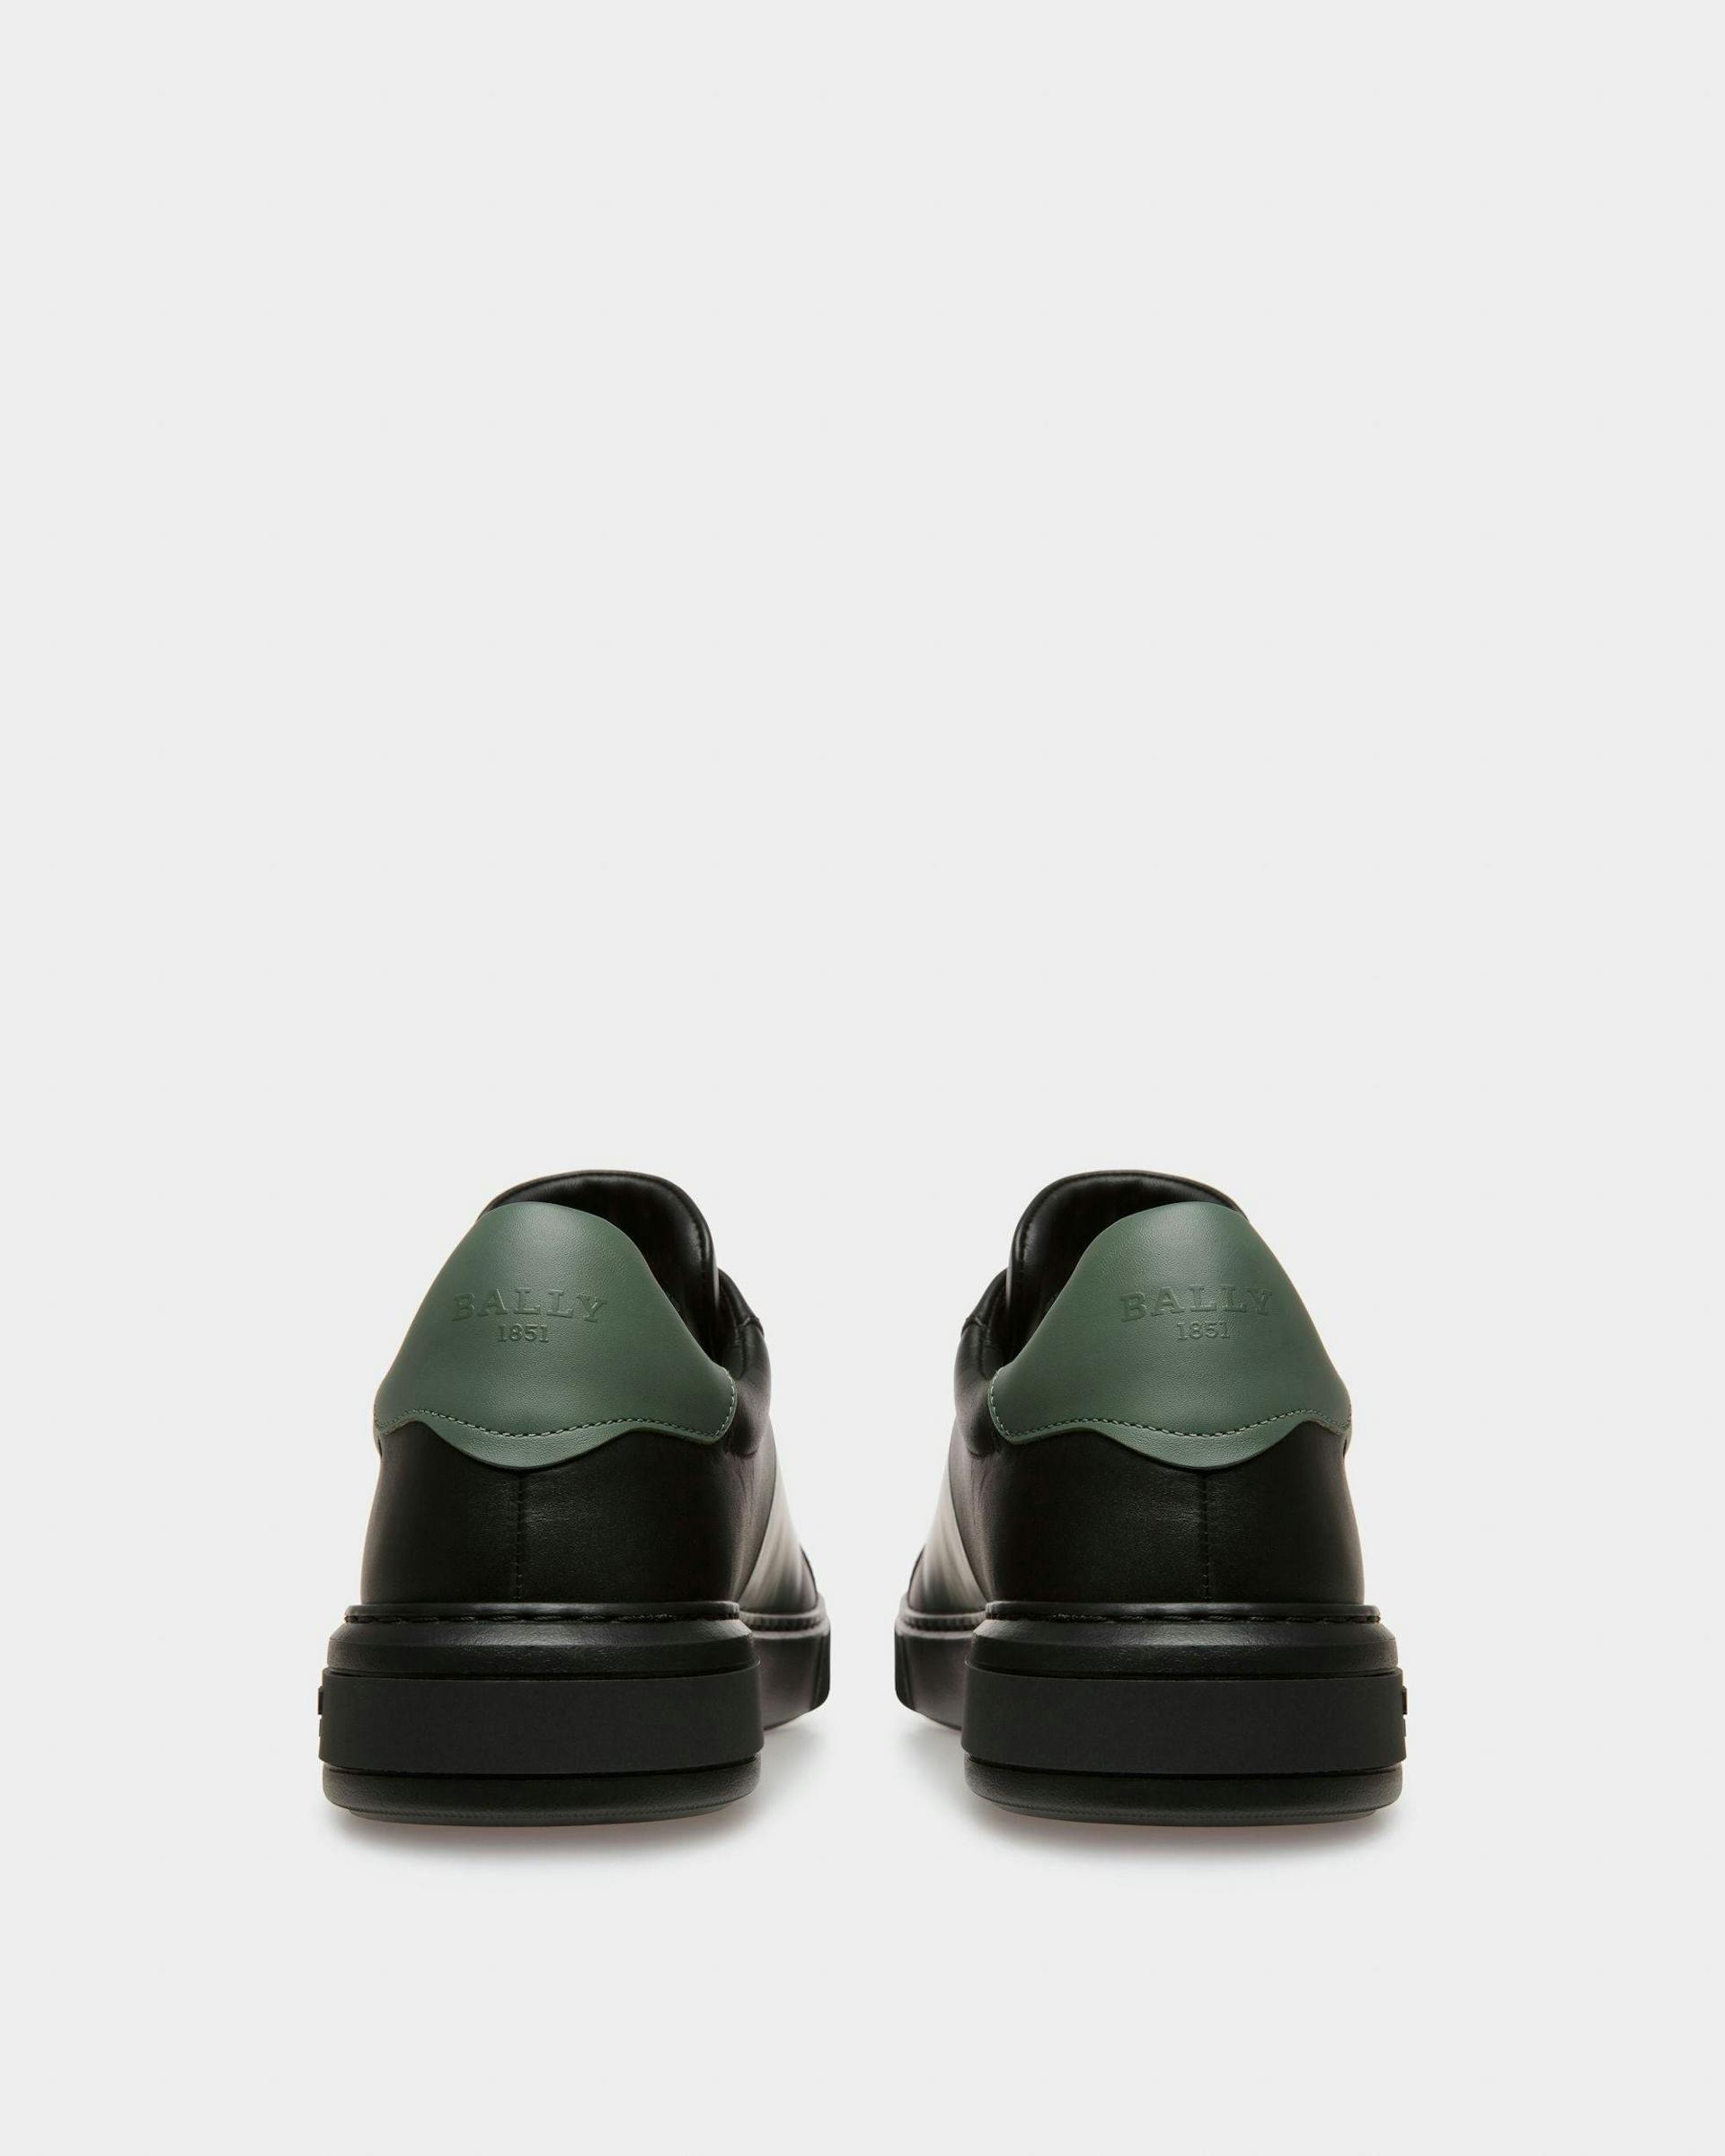 Mitty Sneakers En Cuir Noir Et Vert - Homme - Bally - 04